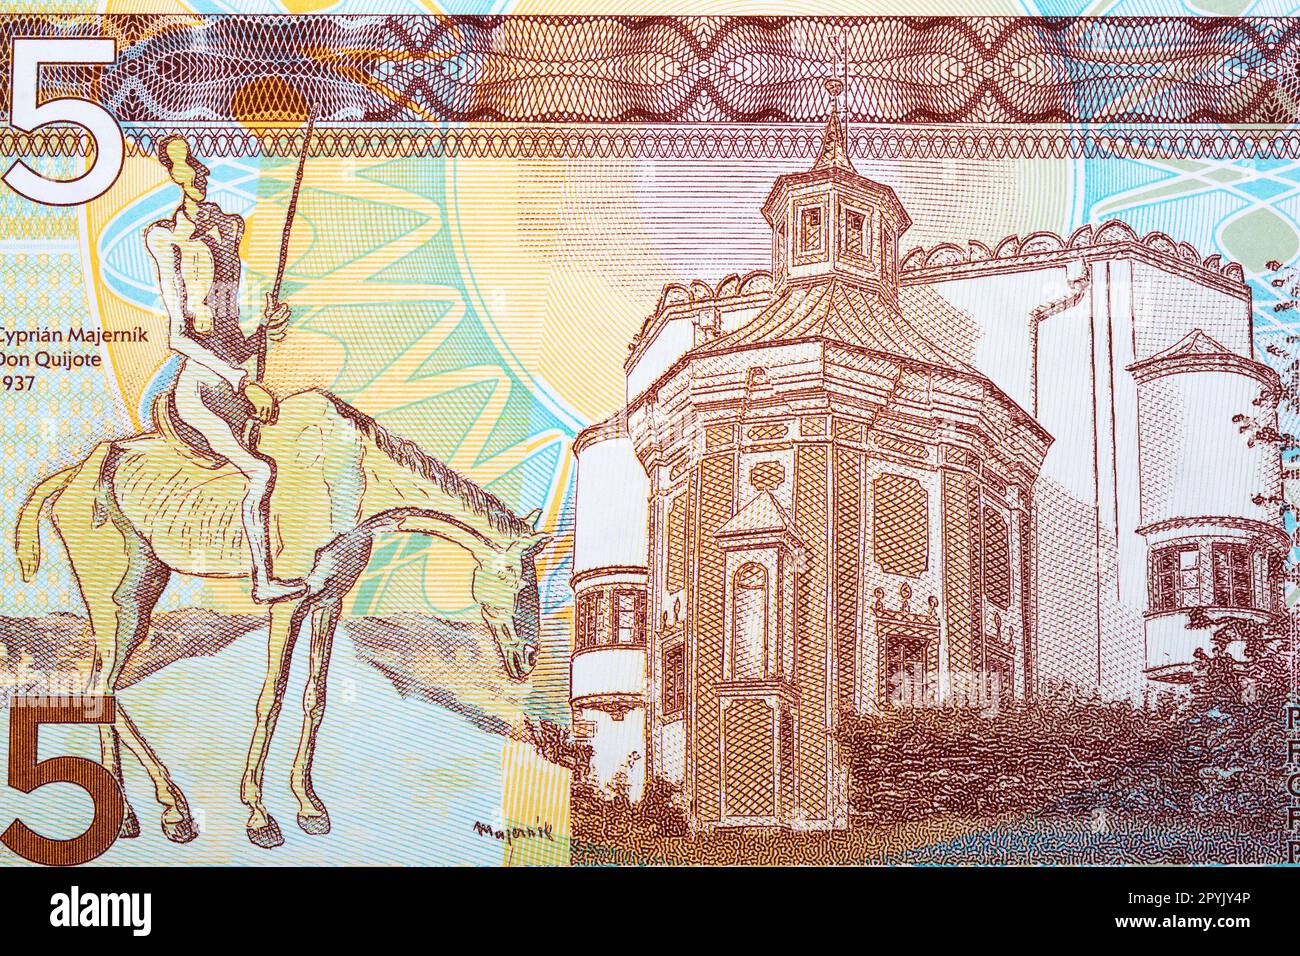 Fragment of Cyprian Majernik's painting - Don Quixote Stock Photo